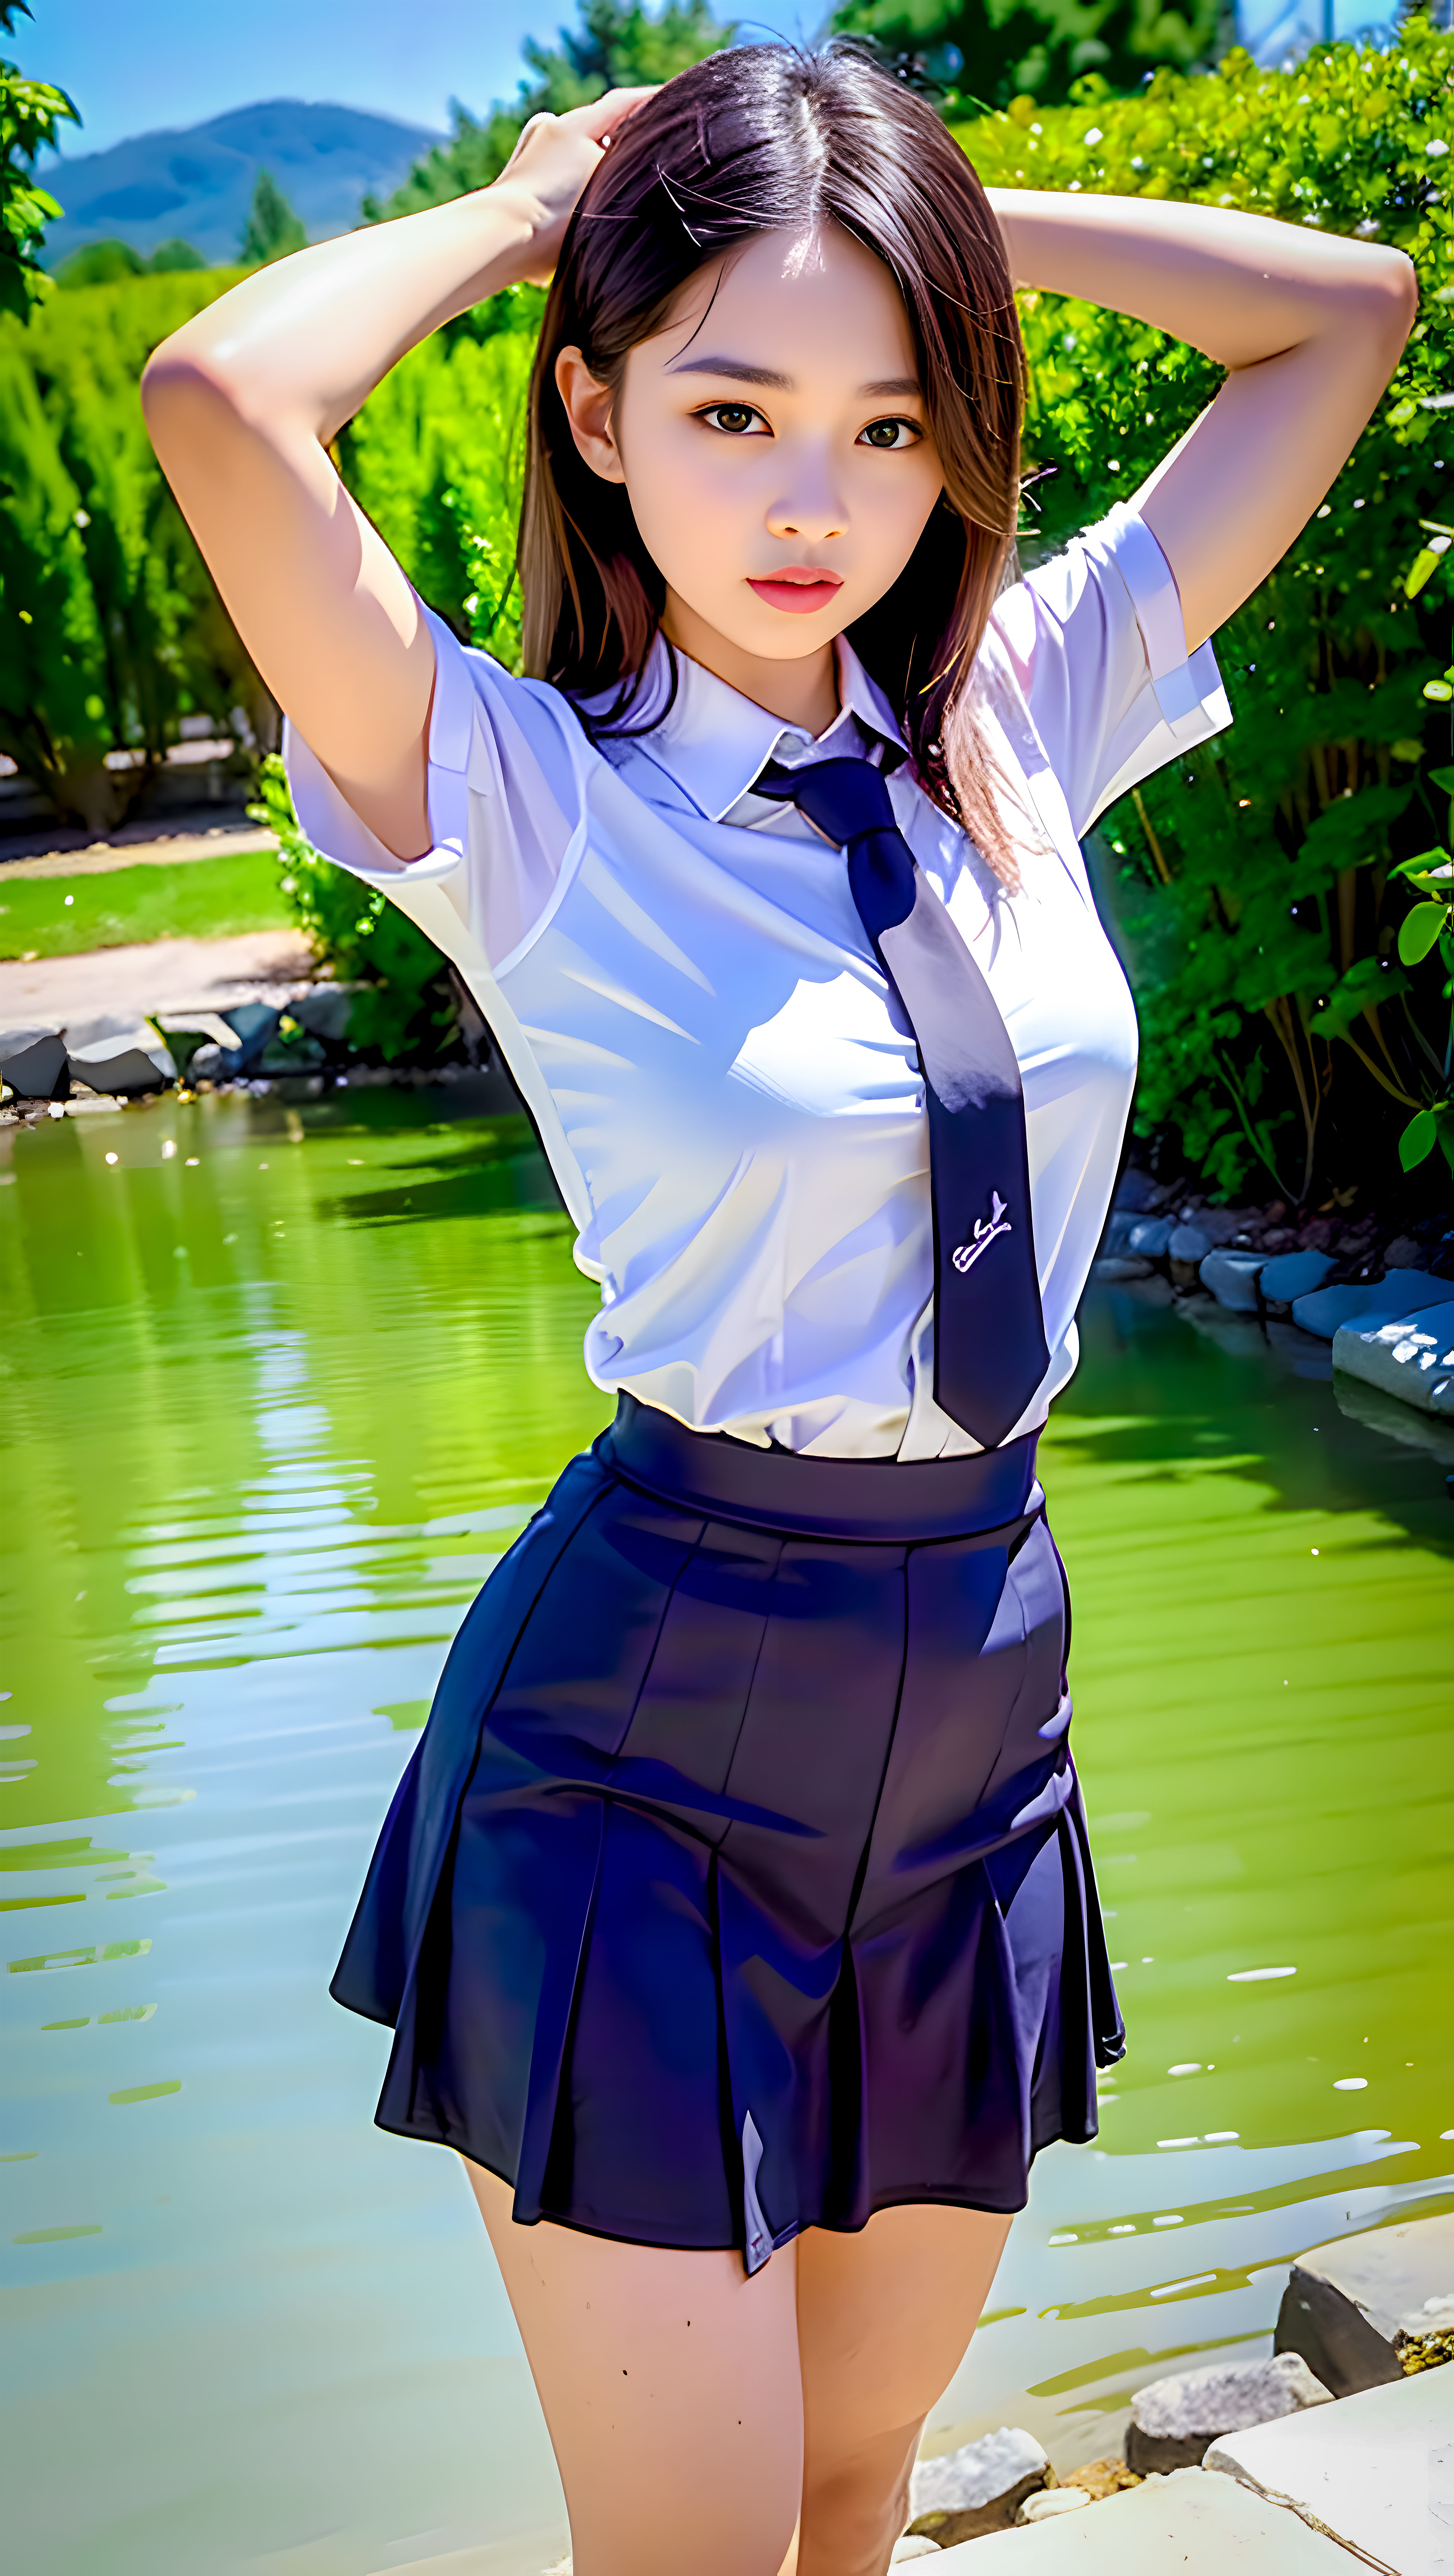 Anime 5376x9523 AI art Asian women portrait display water schoolgirl school uniform looking at viewer